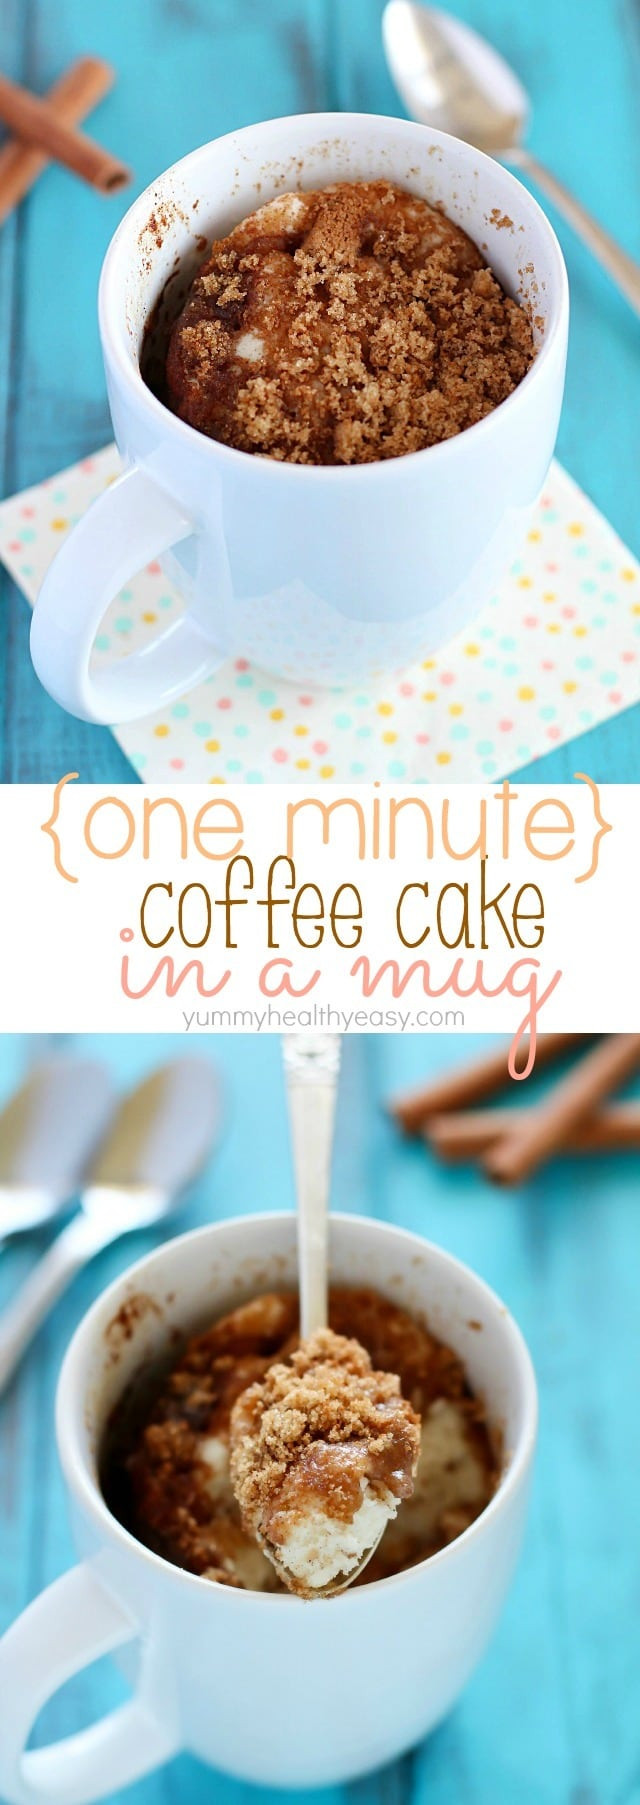 Coffee Cup Cake Microwave
 e Minute Coffee Cake in a Mug Yummy Healthy Easy